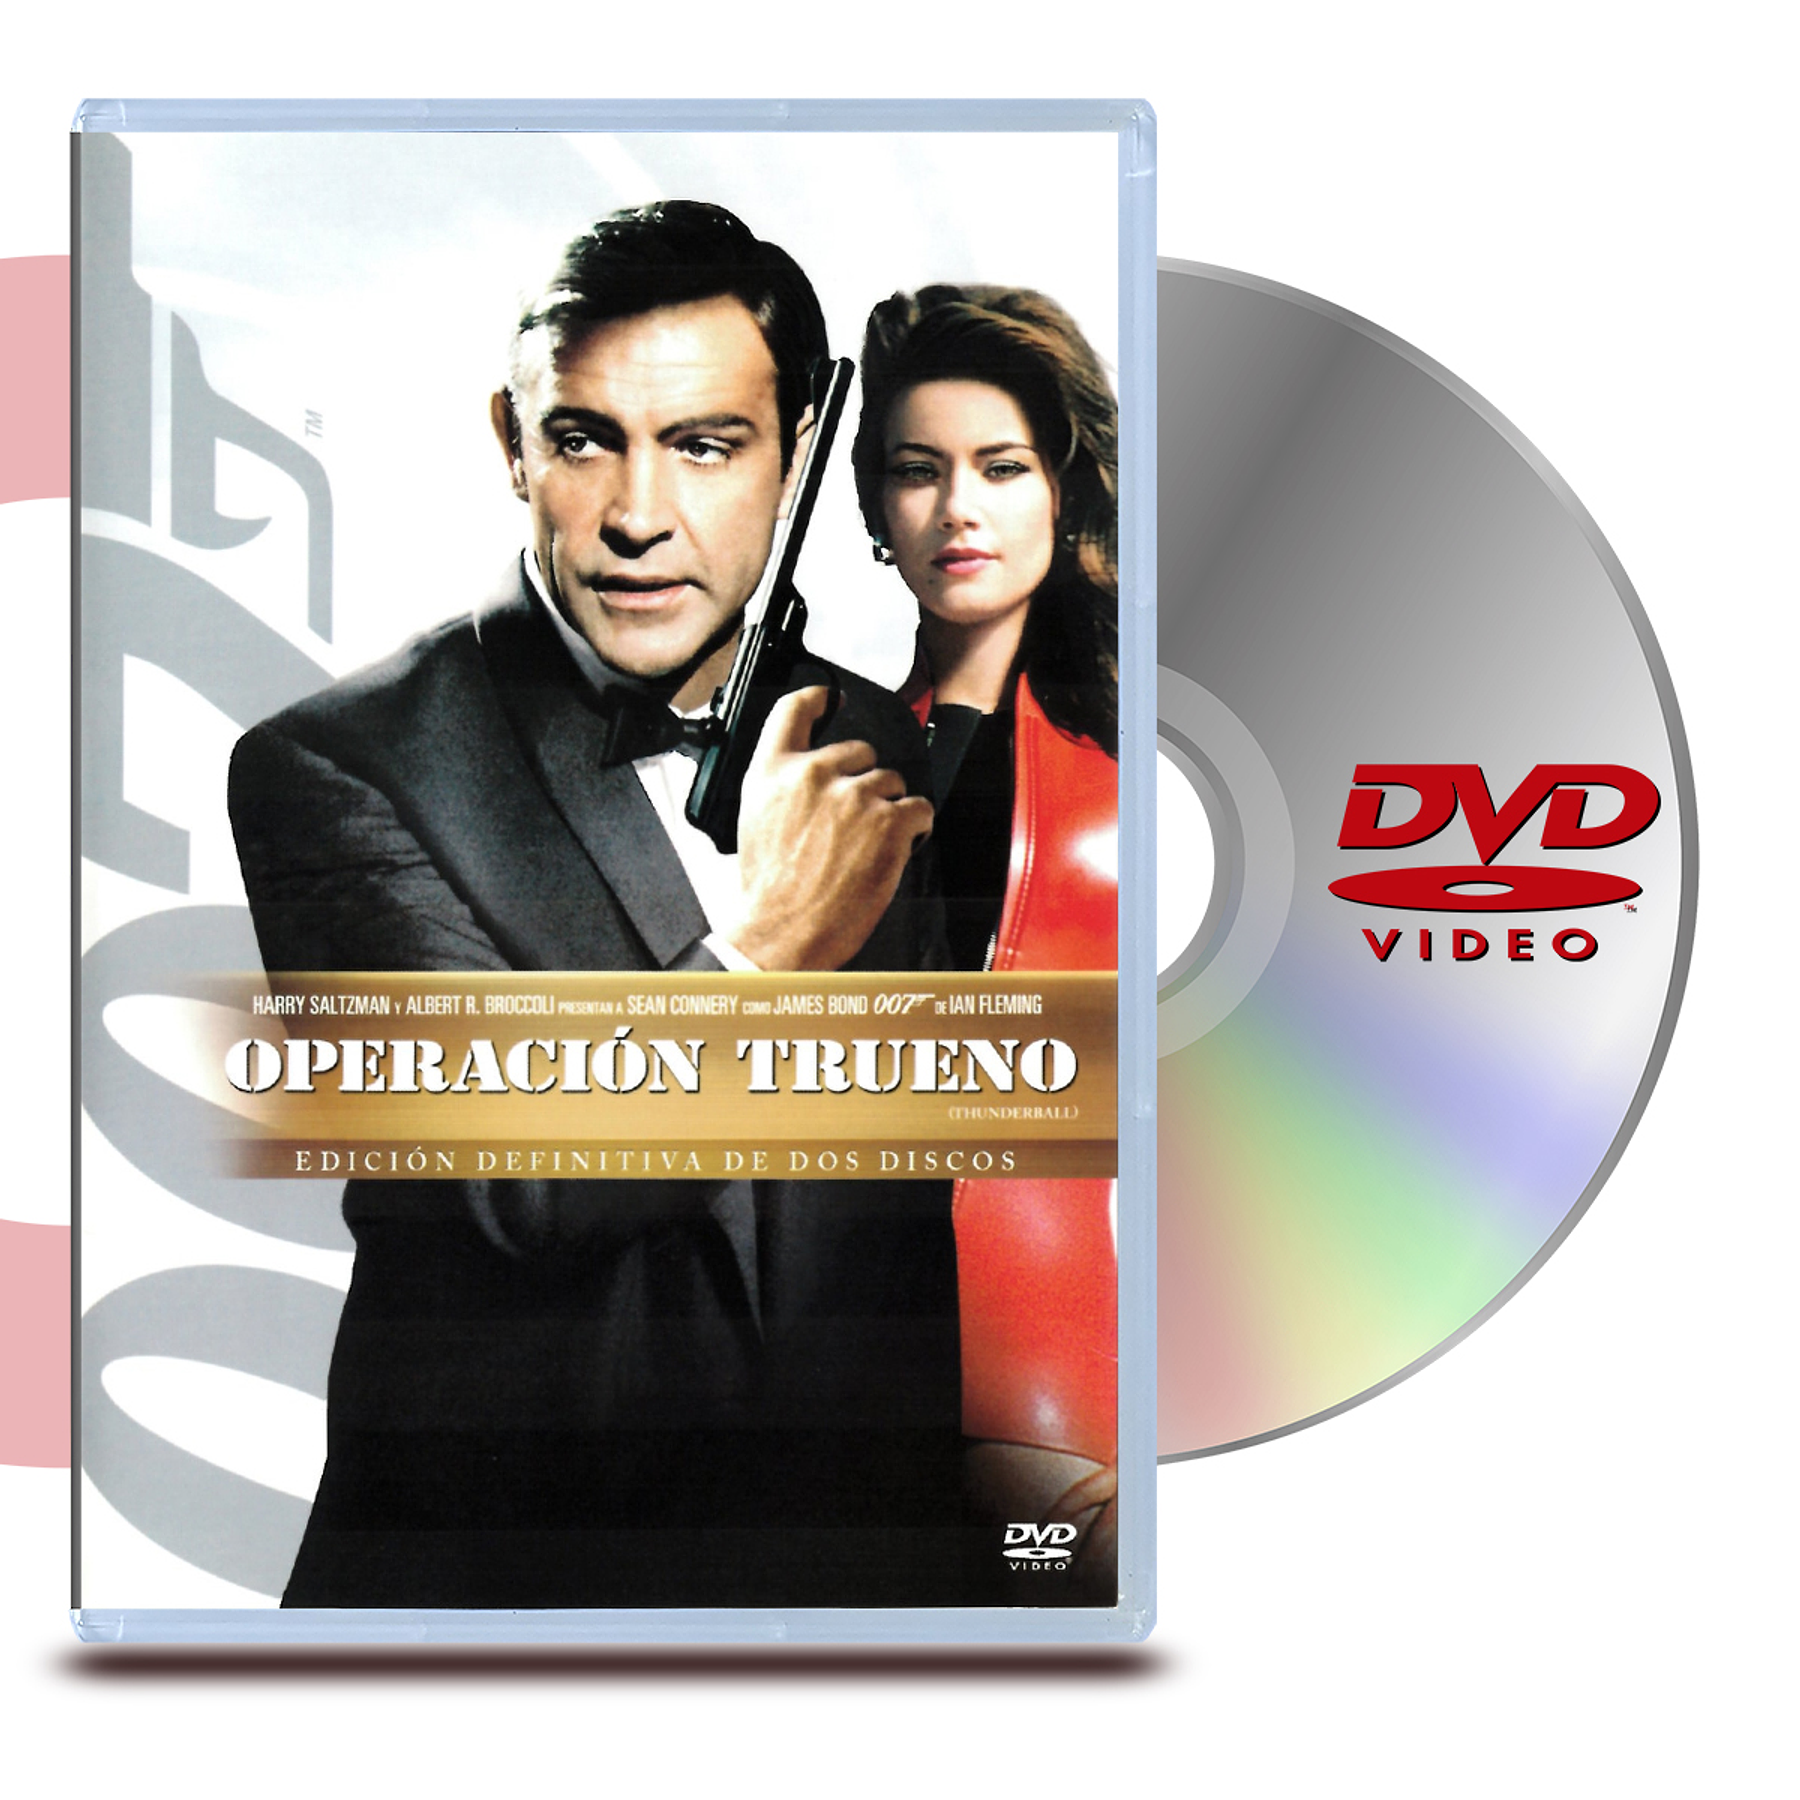 DVD 007 OPERACION TRUENO